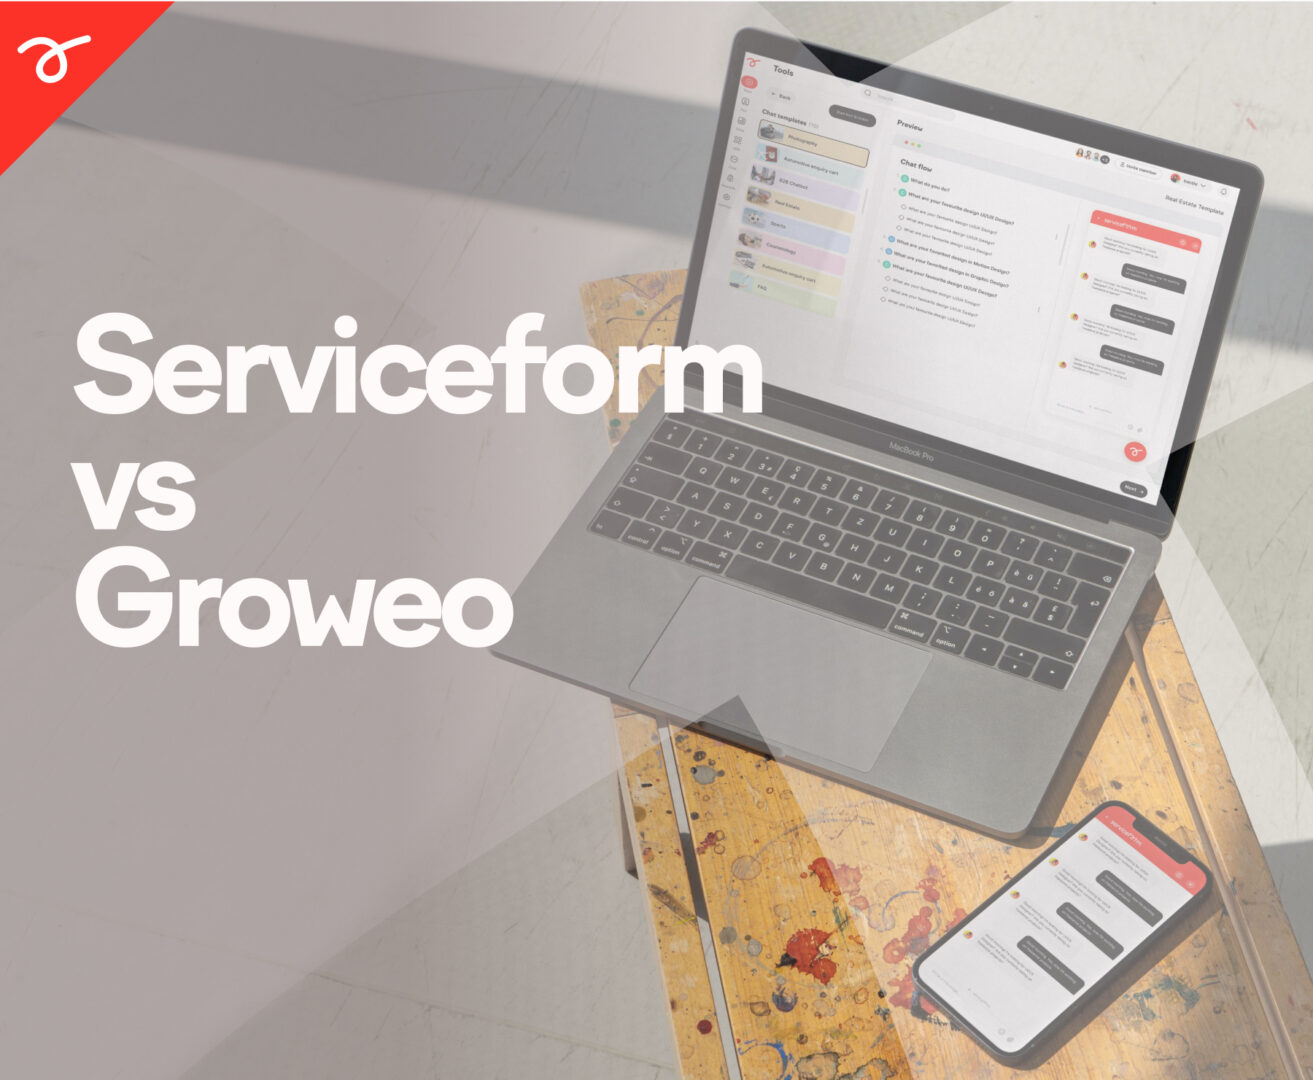 Serviceform vs Groweo